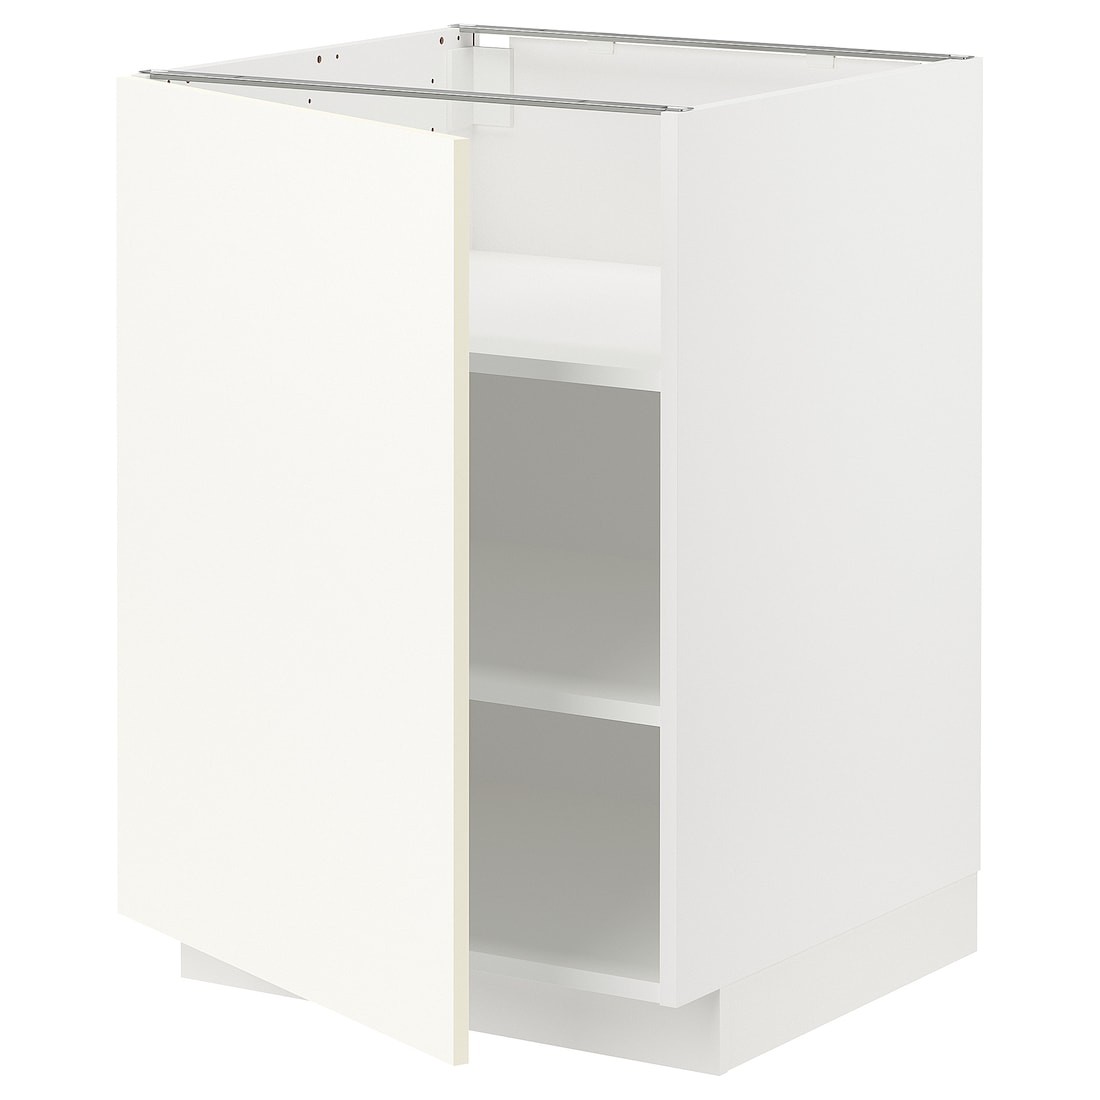 IKEA METOD МЕТОД Напольный шкаф с полками, белый / Vallstena белый 79507124 795.071.24